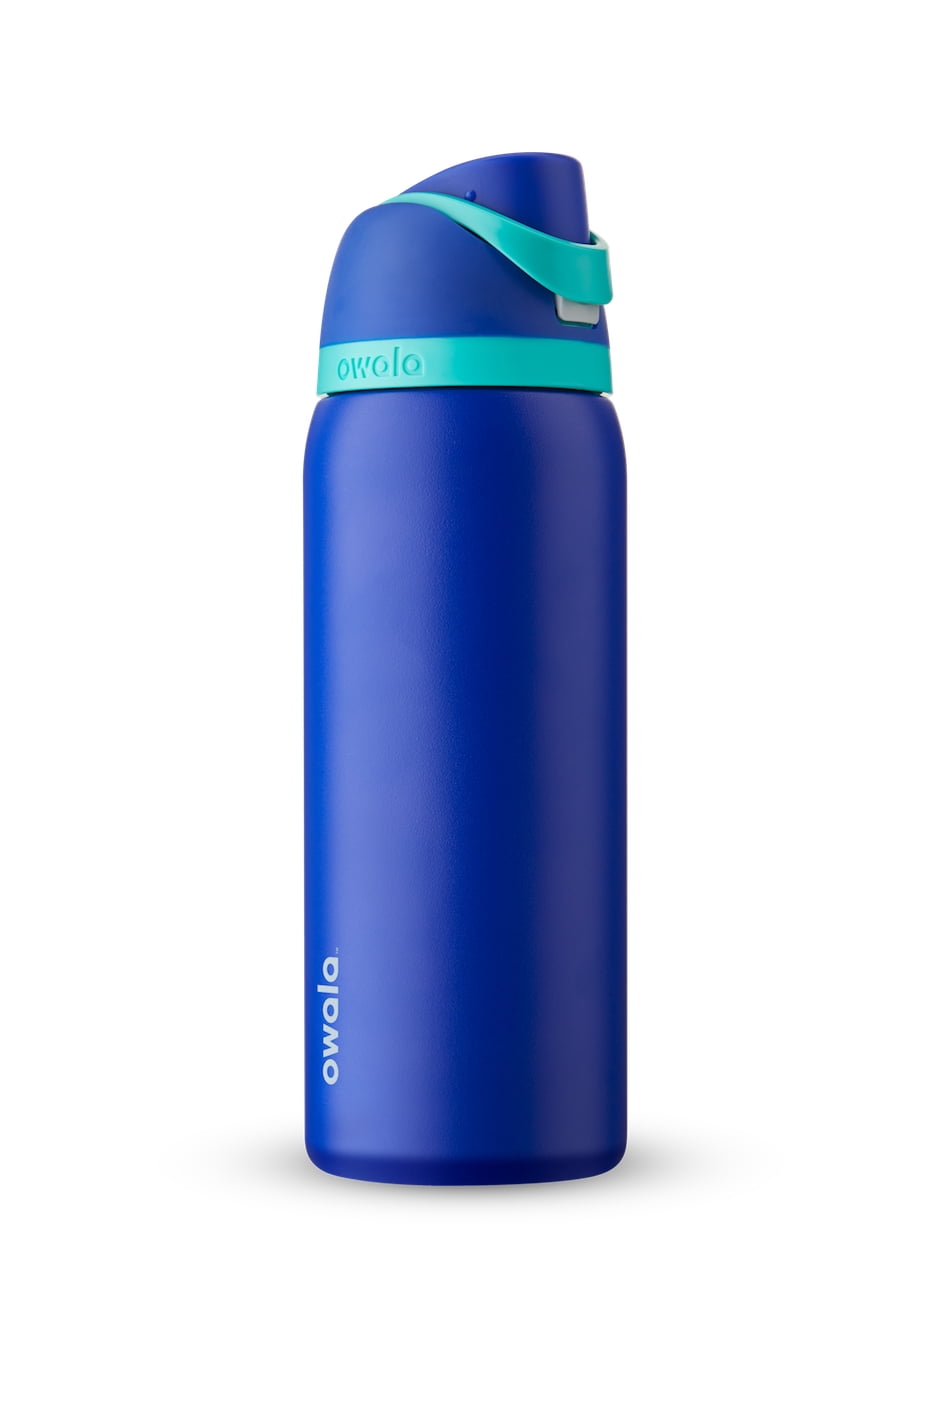 Owala Bottle Boot Blue / 24oz / Silicone